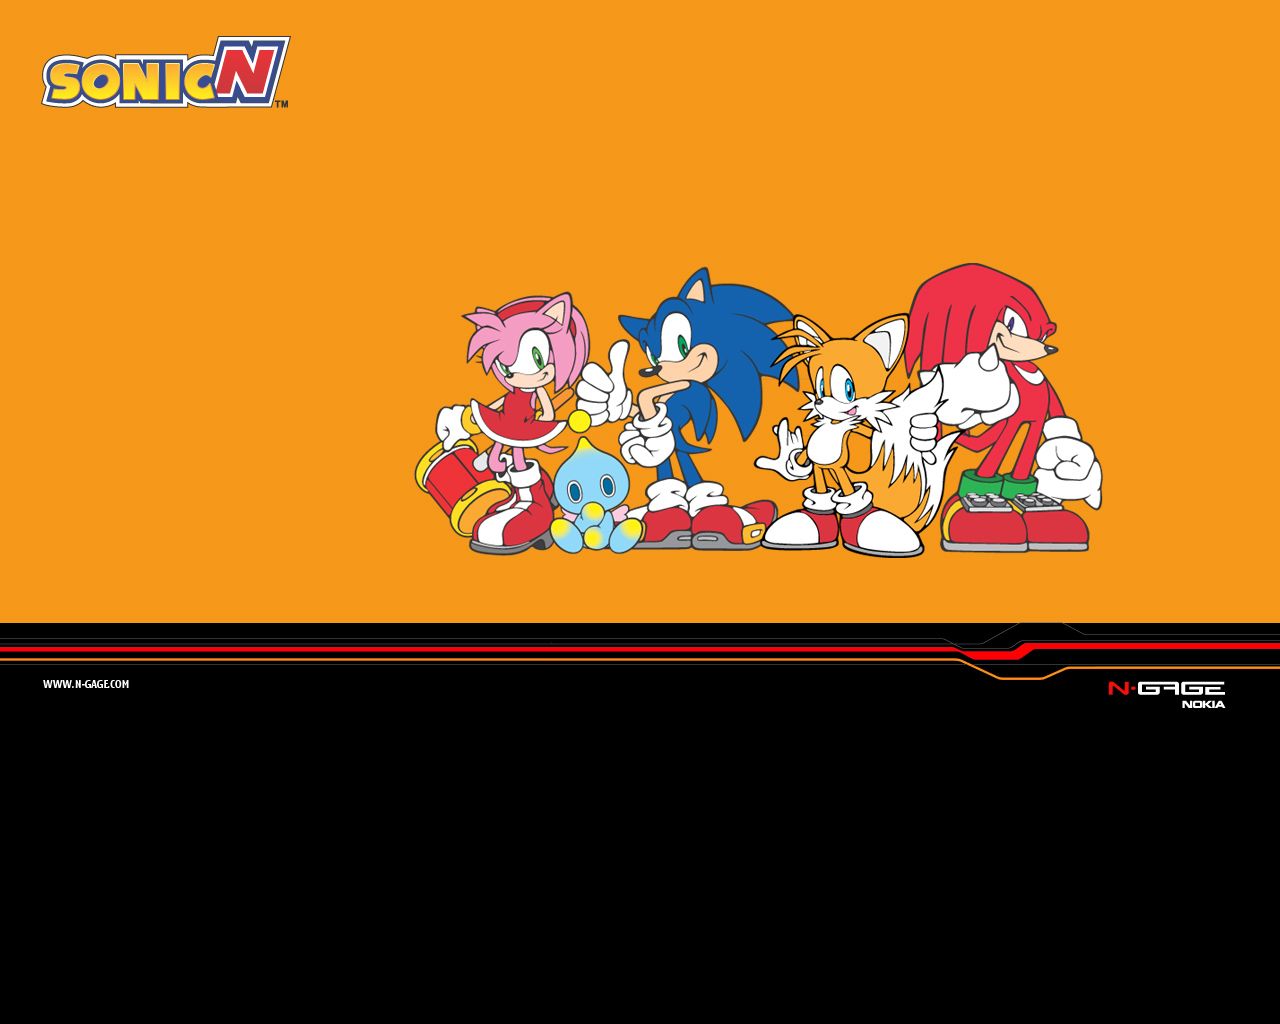 Sonic Advance (2003) promotional art